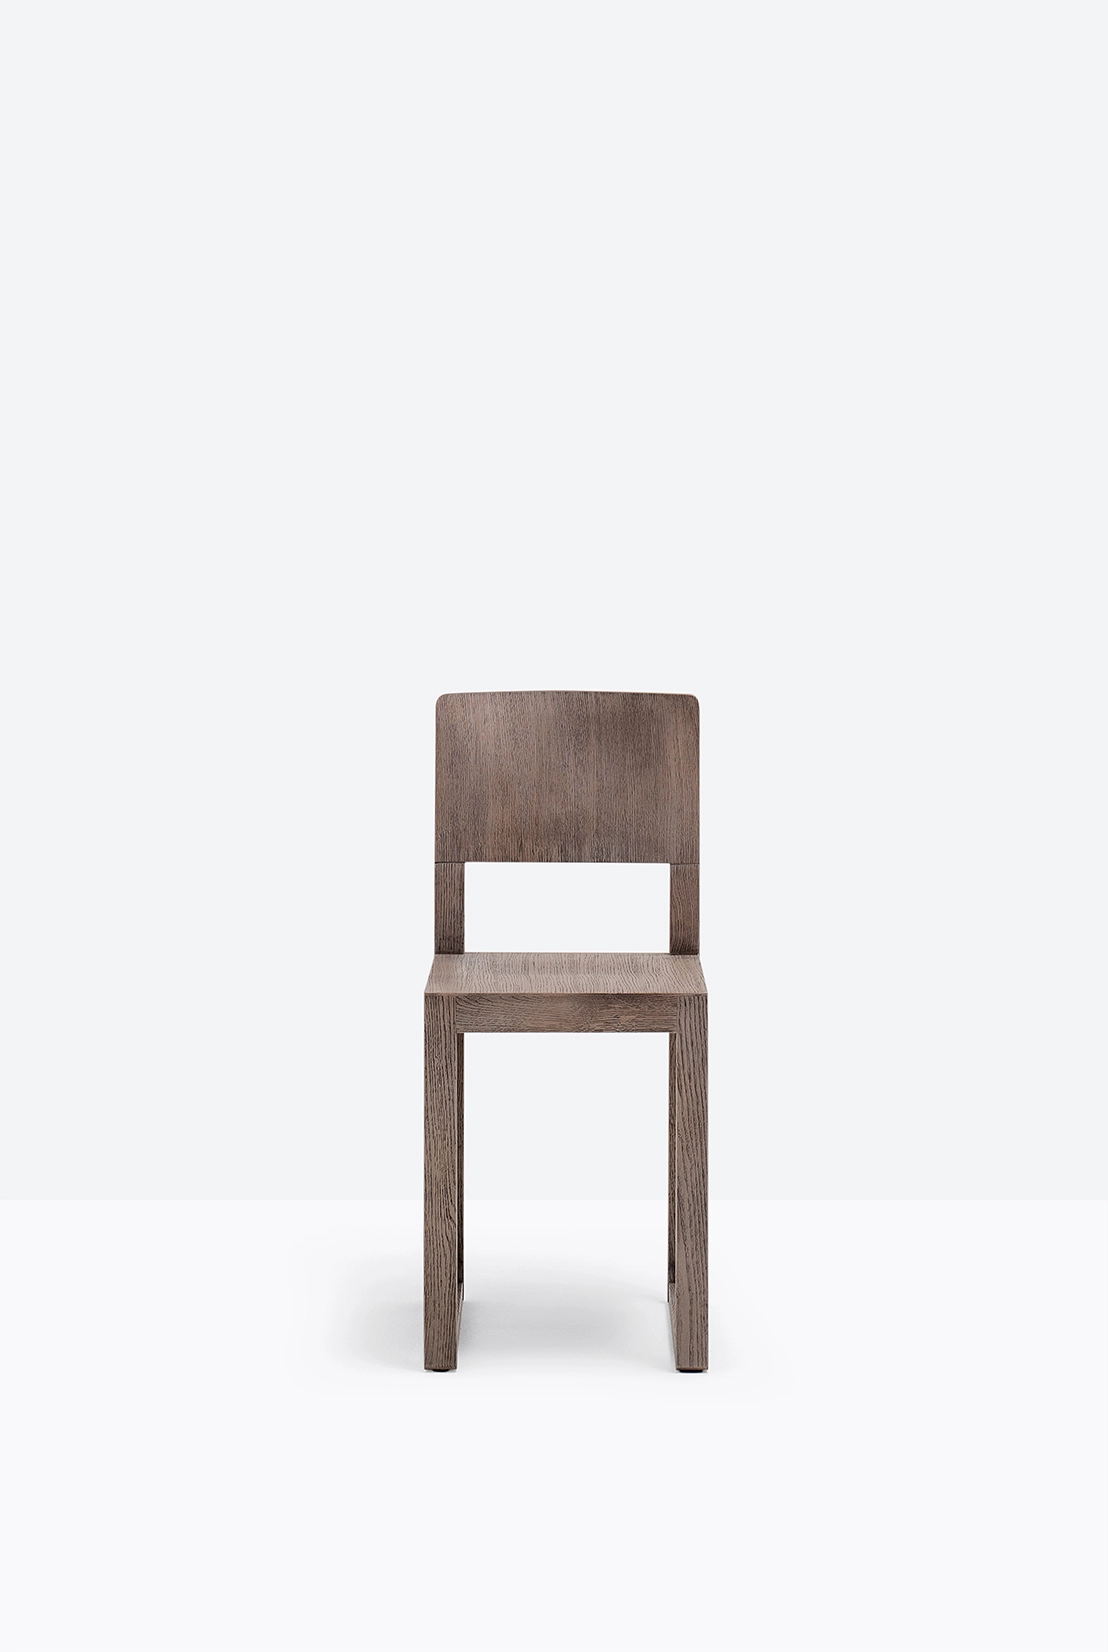 Stuhl BRERA 380 - Holz von Pedrali AZ1 - hell blau lackiert